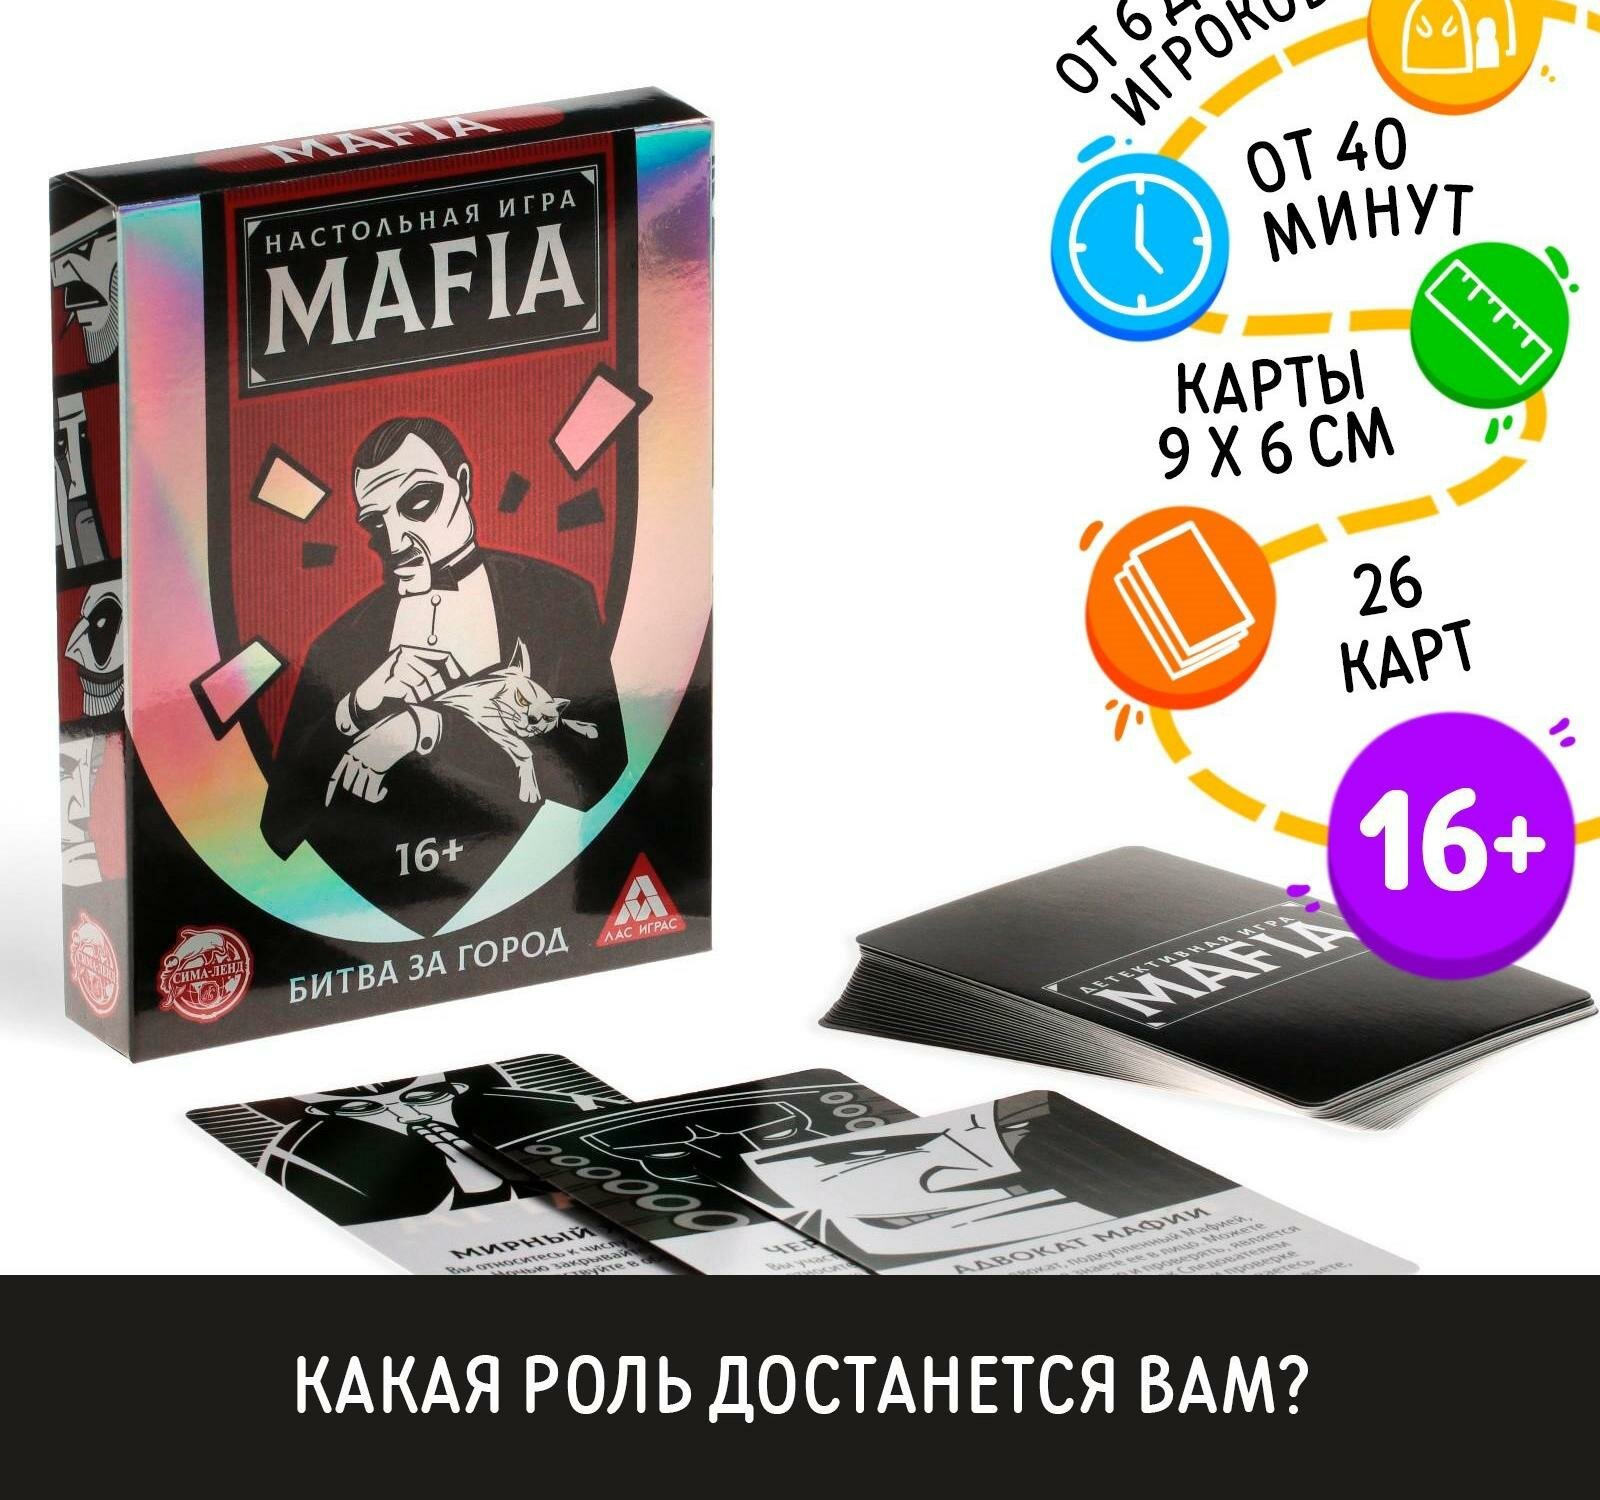 Настольная игра "MAFIA Битва за город", 26 карт